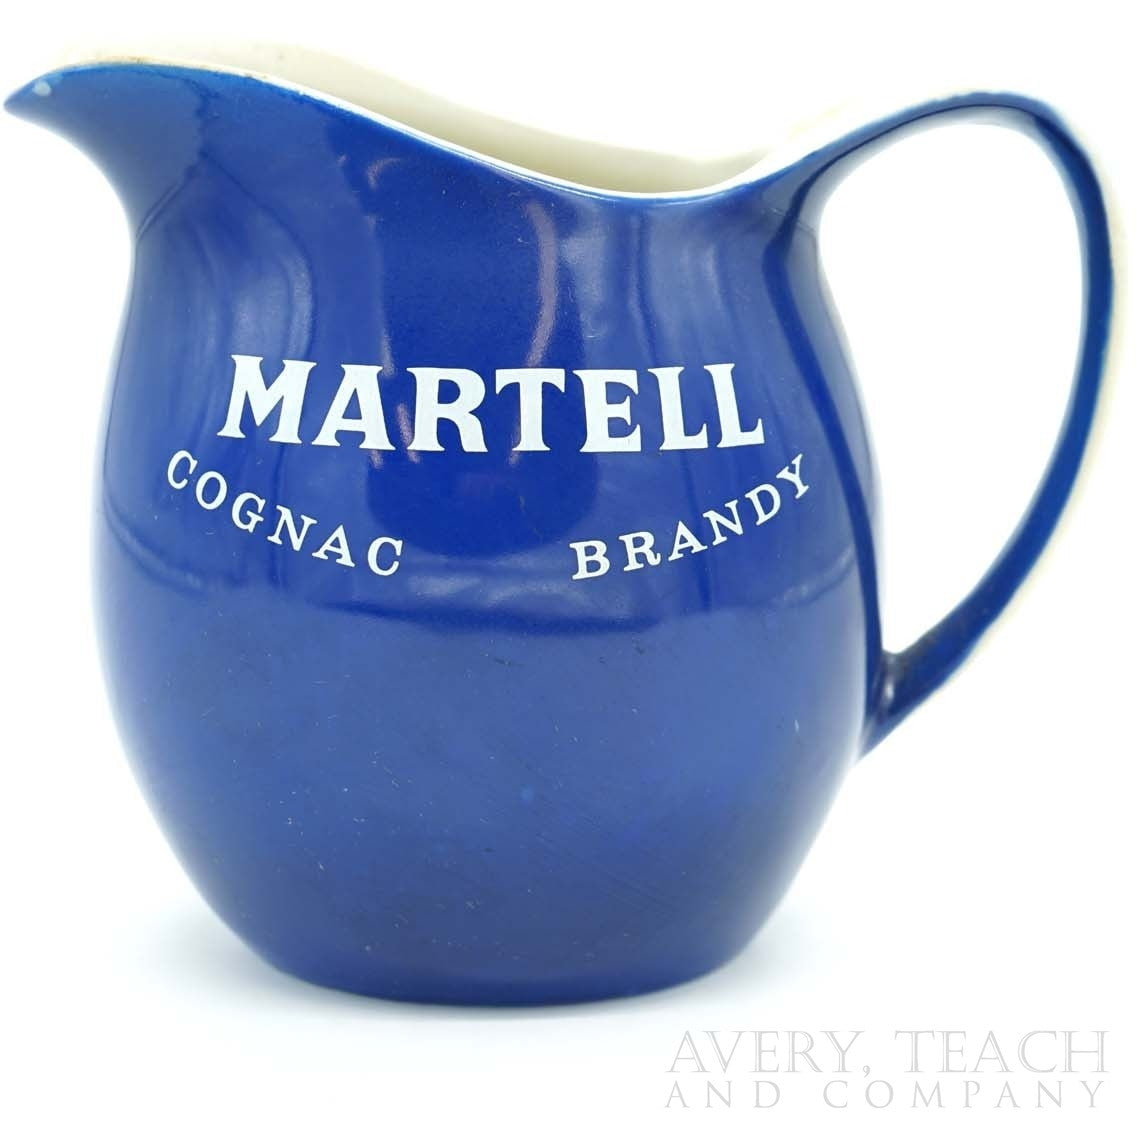 Vintage Martell Cognac Brandy Jug/Pitcher